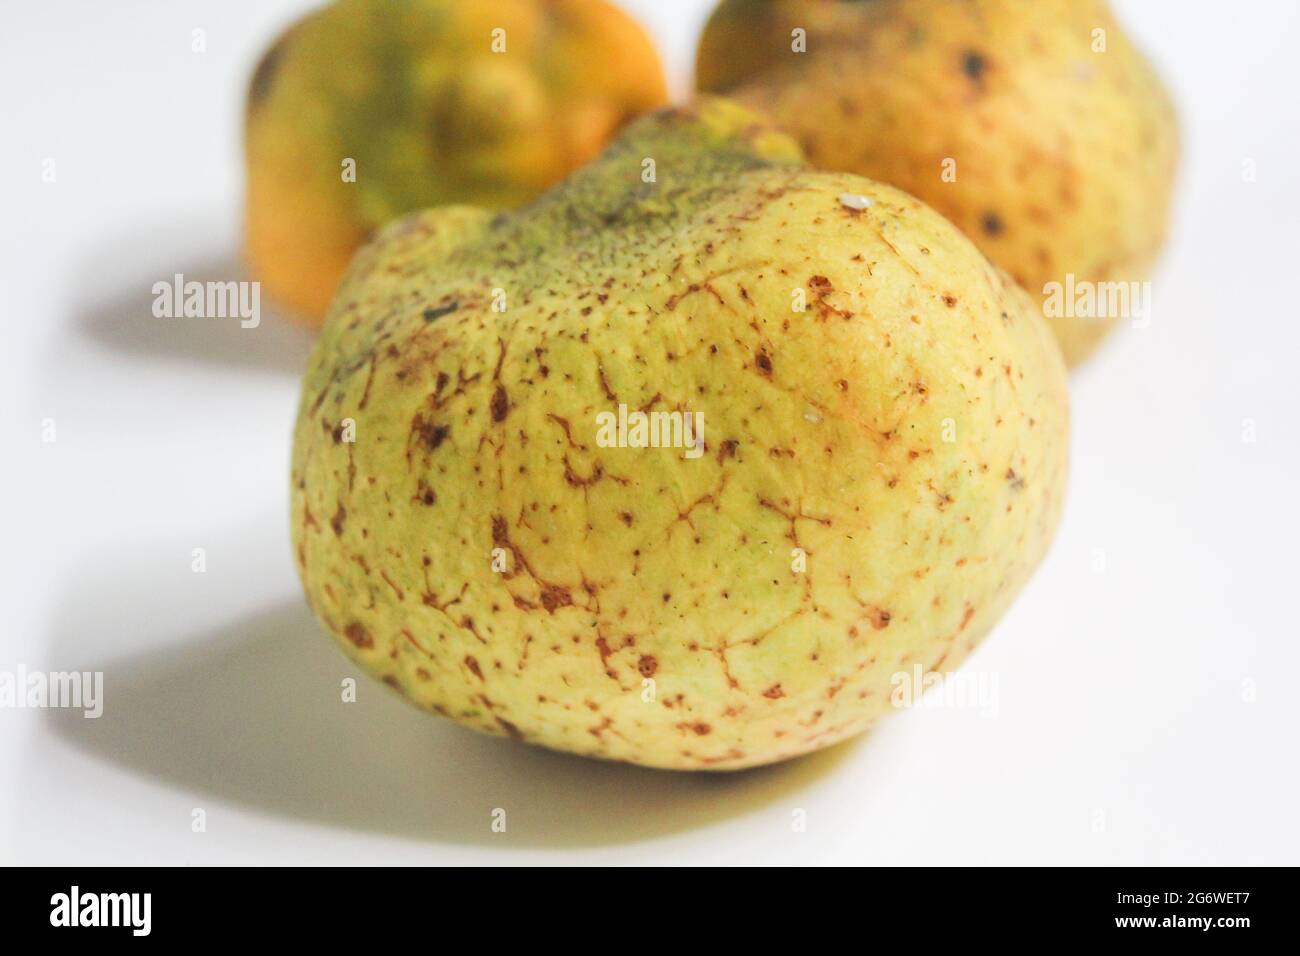 Artocarpus lacucha fruit isolated on surface, tropical fruit Stock Photo